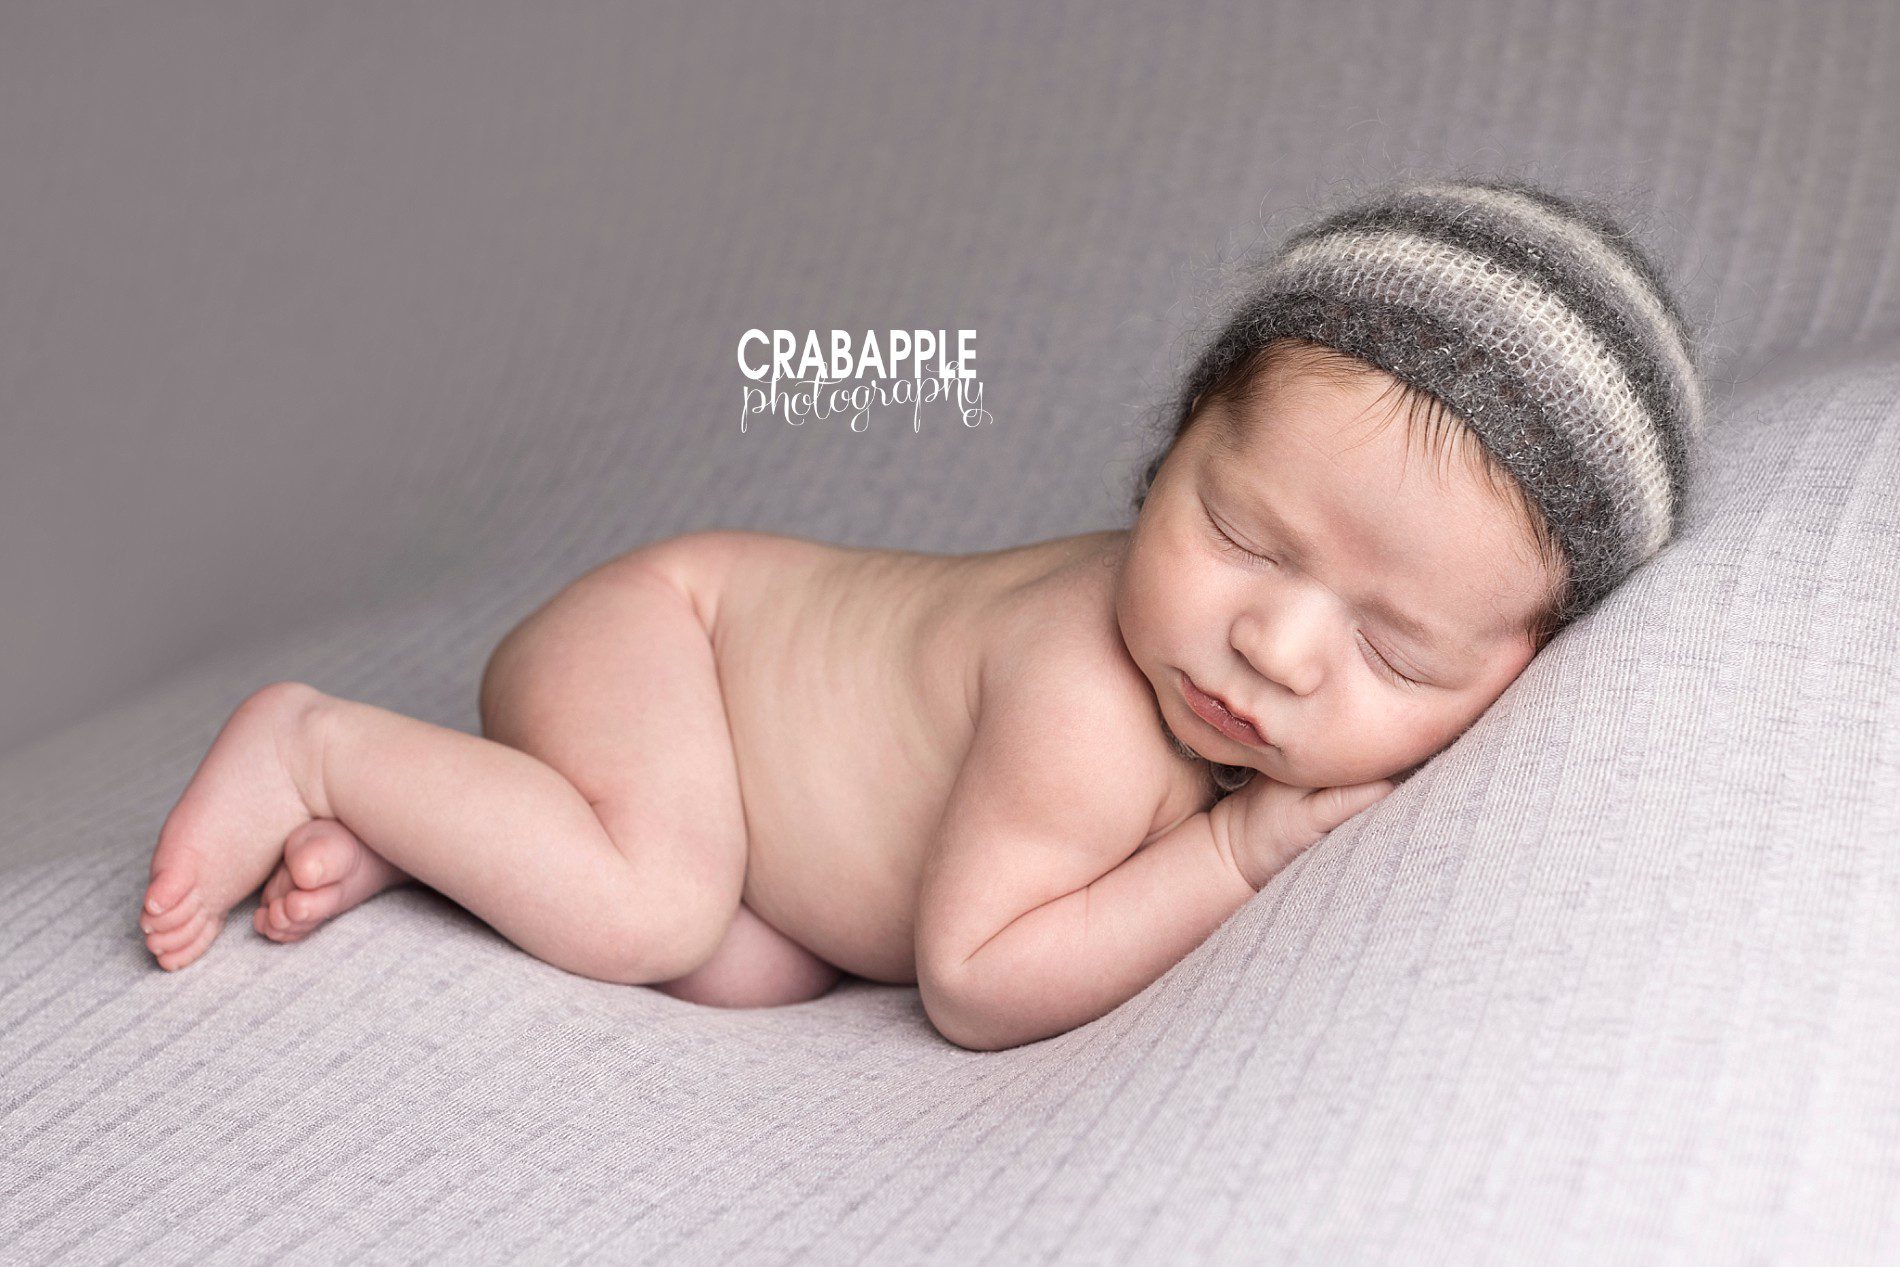 simple classic newborn photos using gray